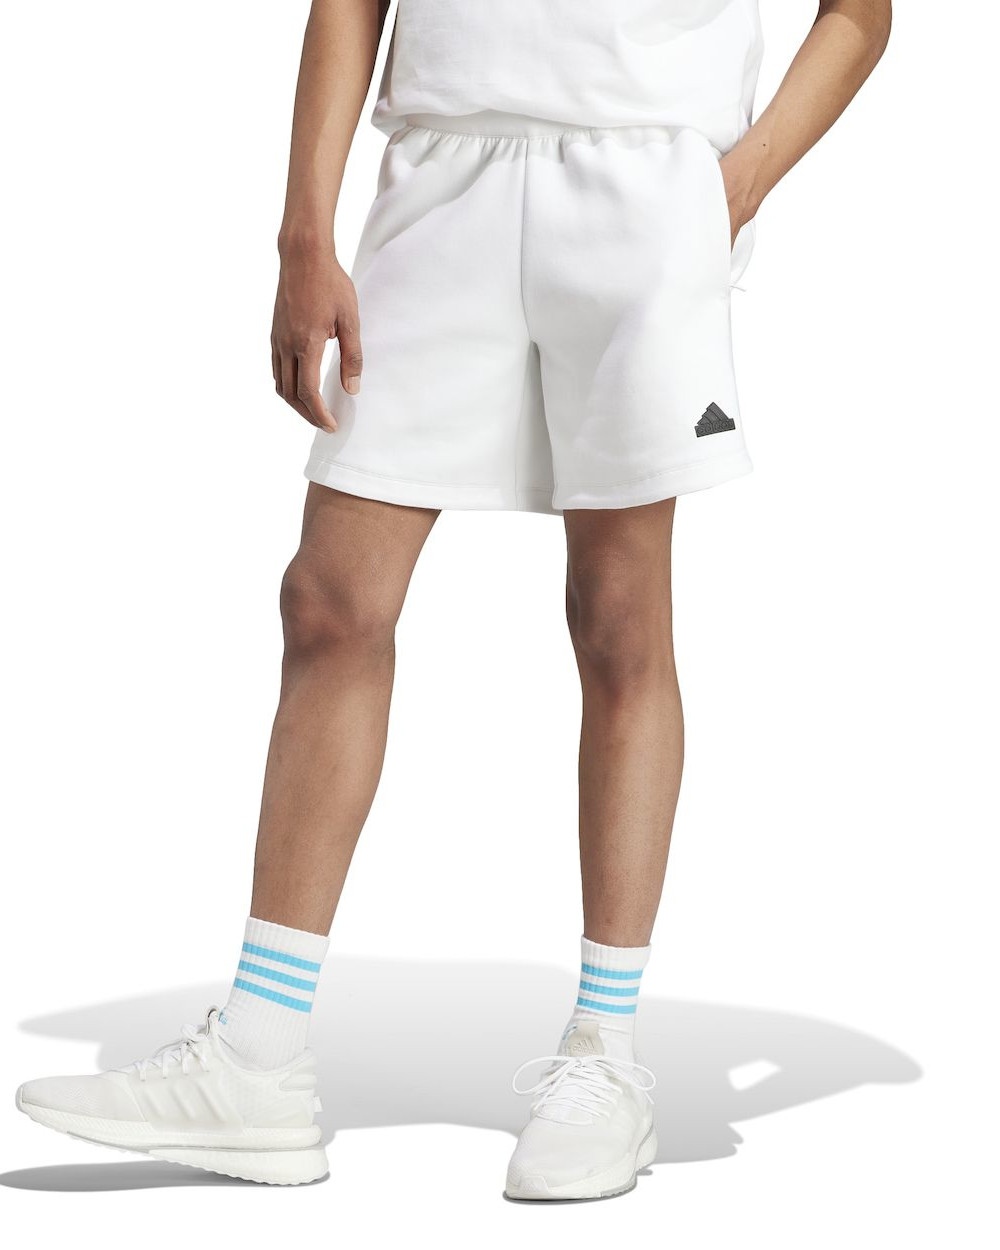  Pantaloncini Shorts UOMO Adidas Z.N.E. Premium Bianco Cotone